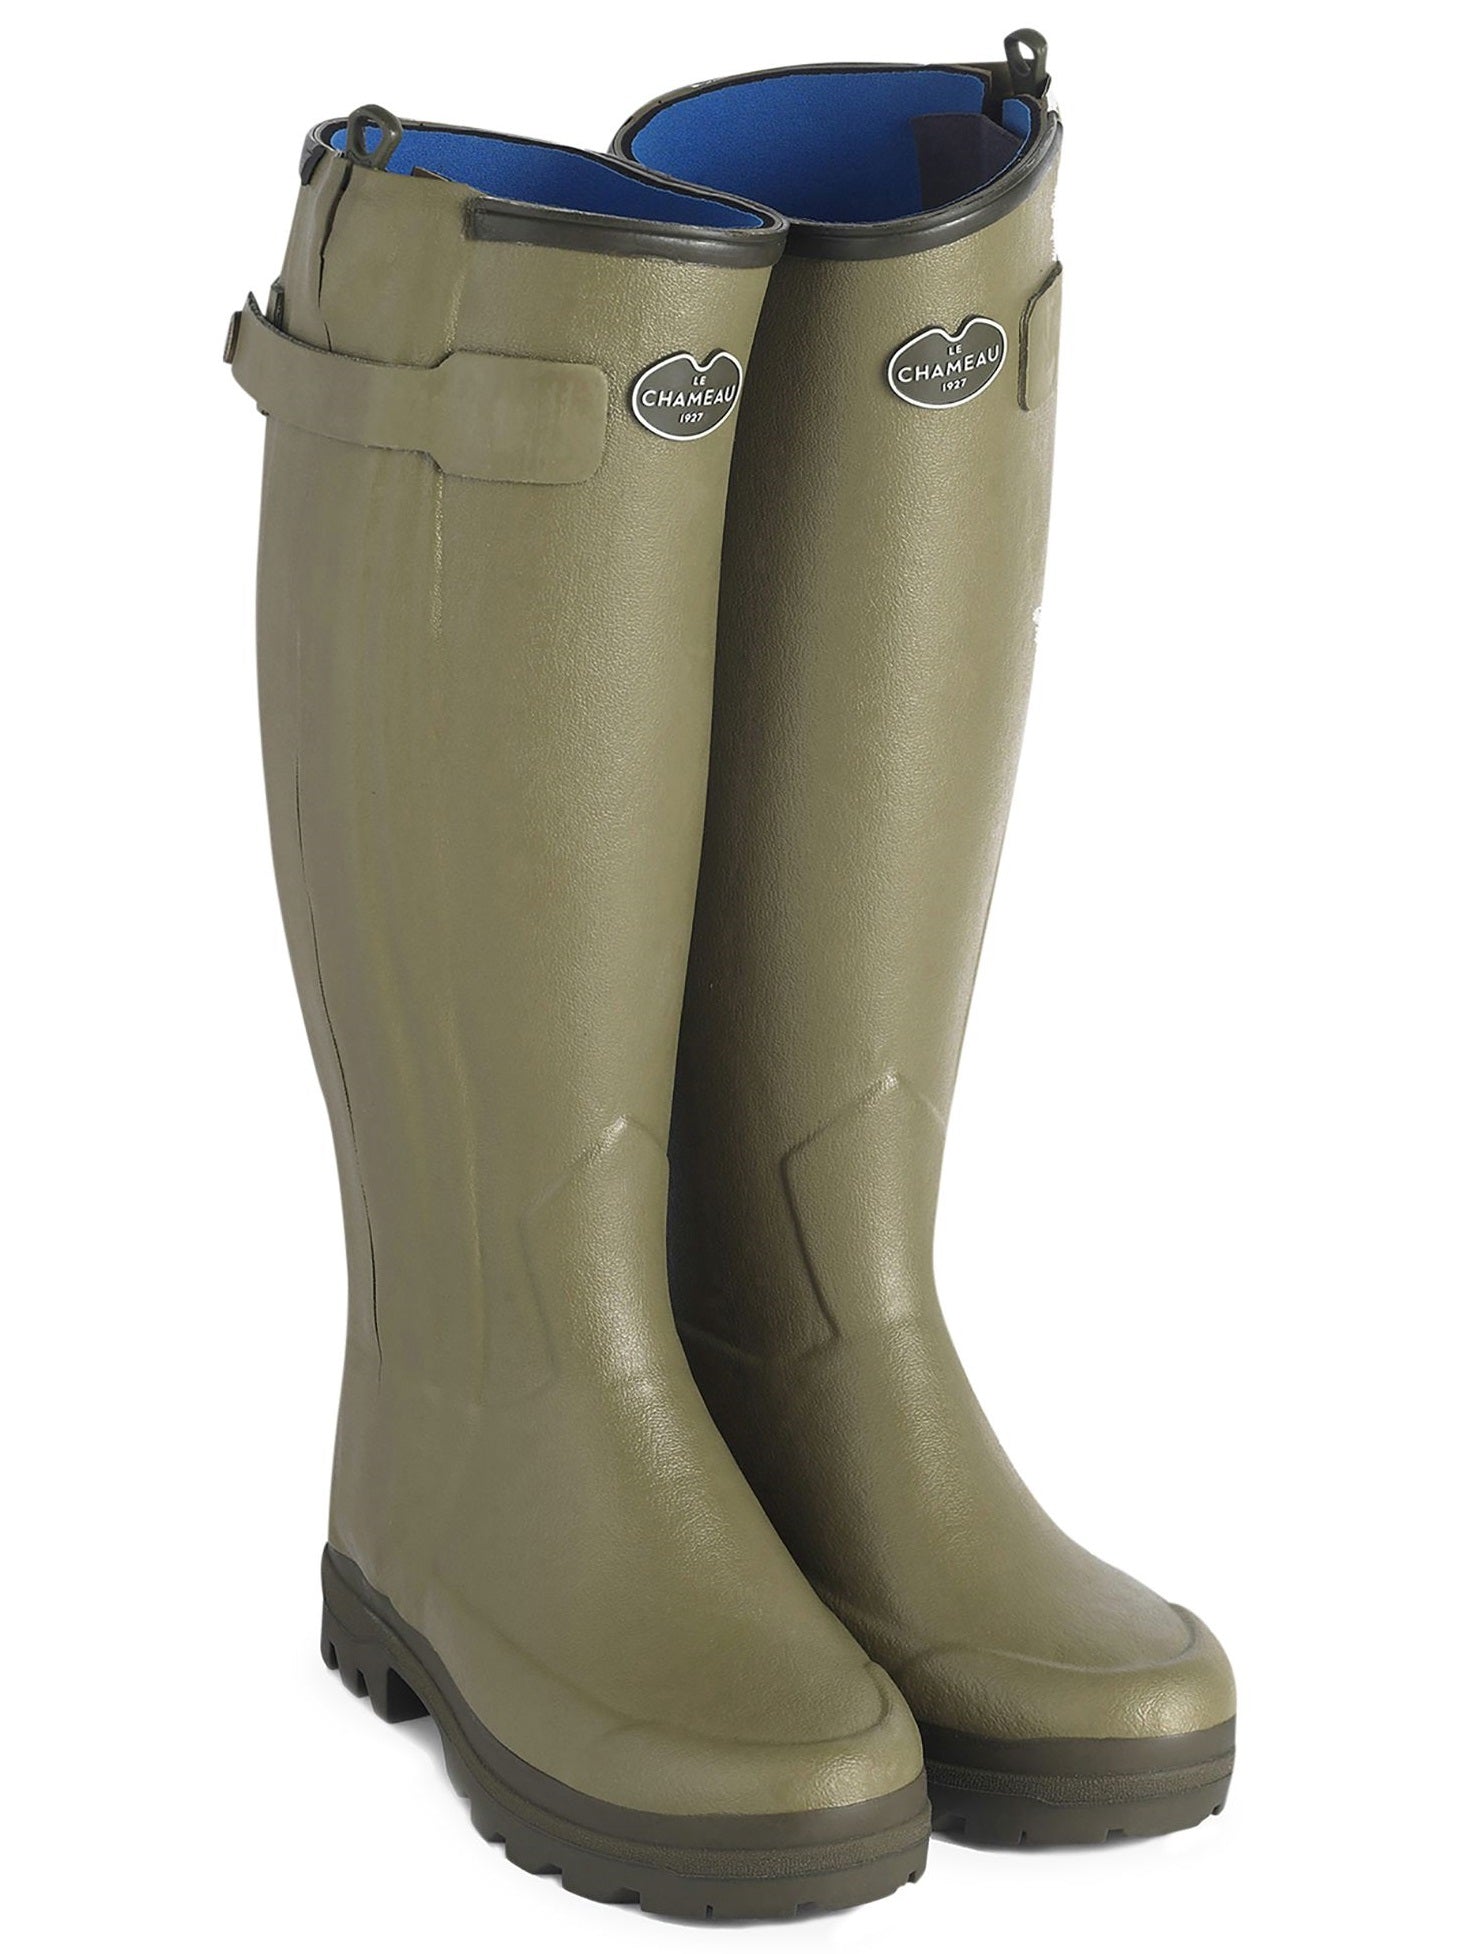 LE CHAMEAU Chasseur Boots - Ladies Neoprene Lined Full Zip - Vert Vierzon